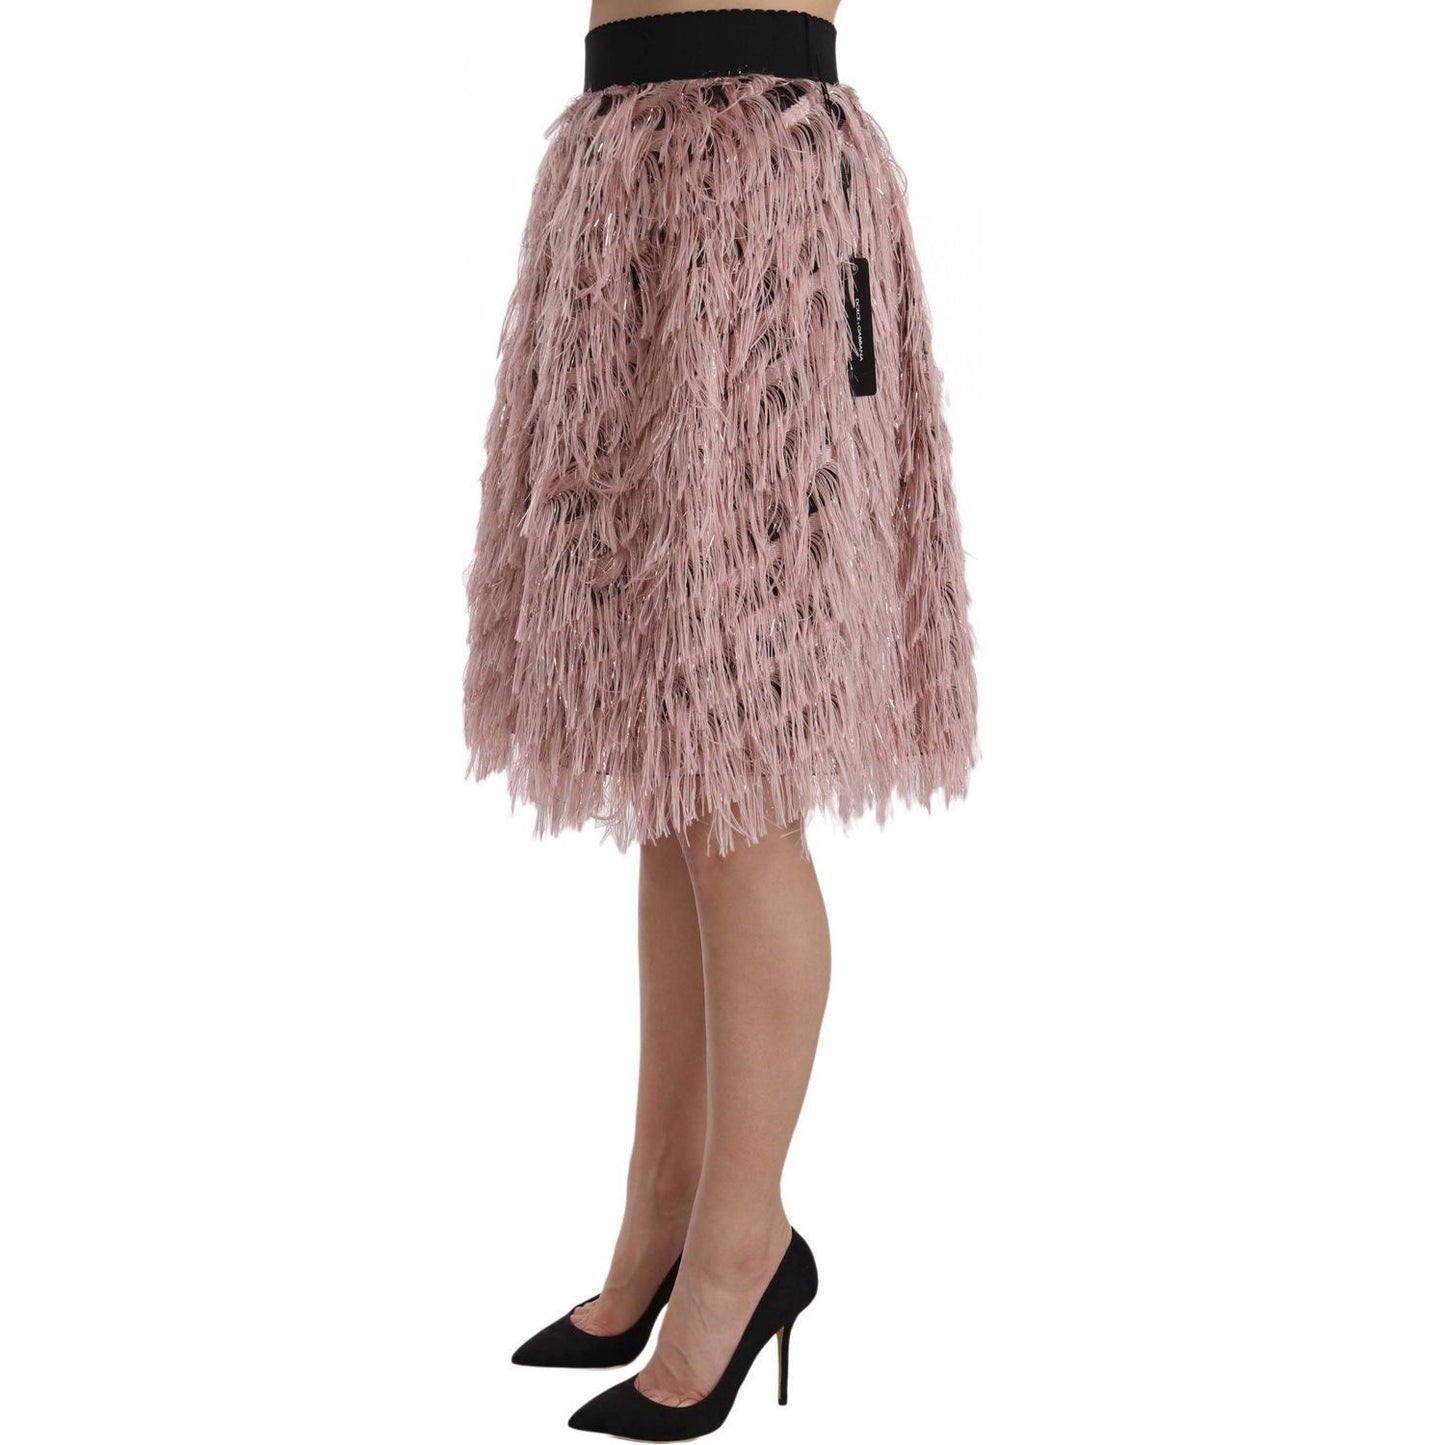 Dolce & Gabbana Wide Elastic Waist High Fashion Skirt pink-gold-fringe-metallic-pencil-a-line-skirt 657889-pink-gold-fringe-metallic-pencil-a-line-skirt-2.jpg